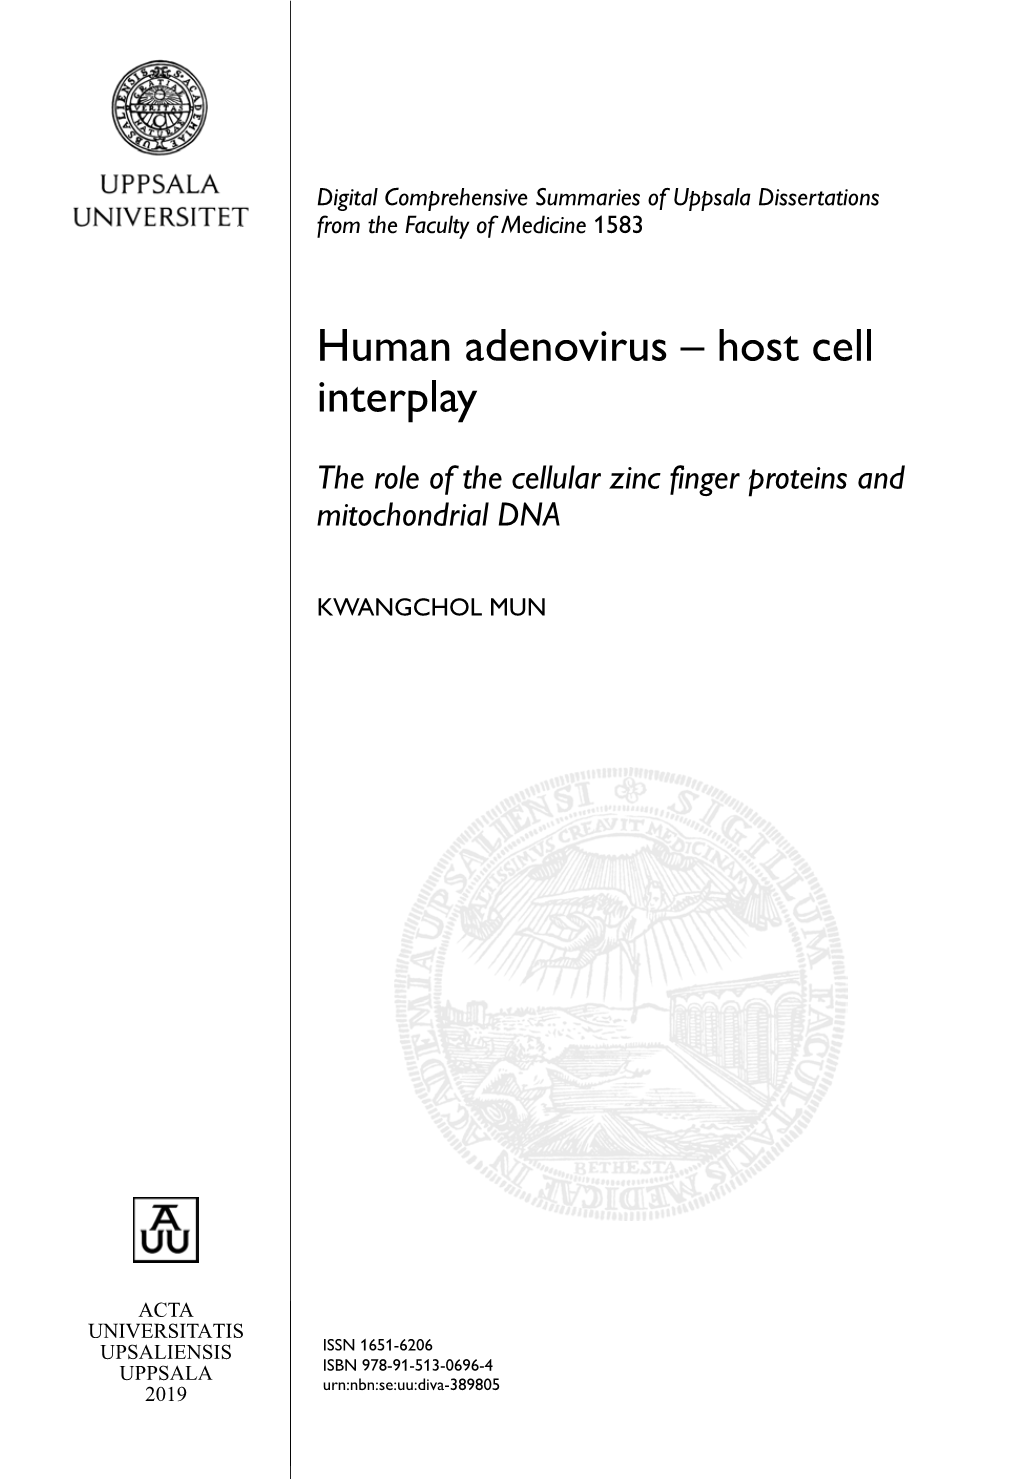 Human Adenovirus – Host Cell Interplay